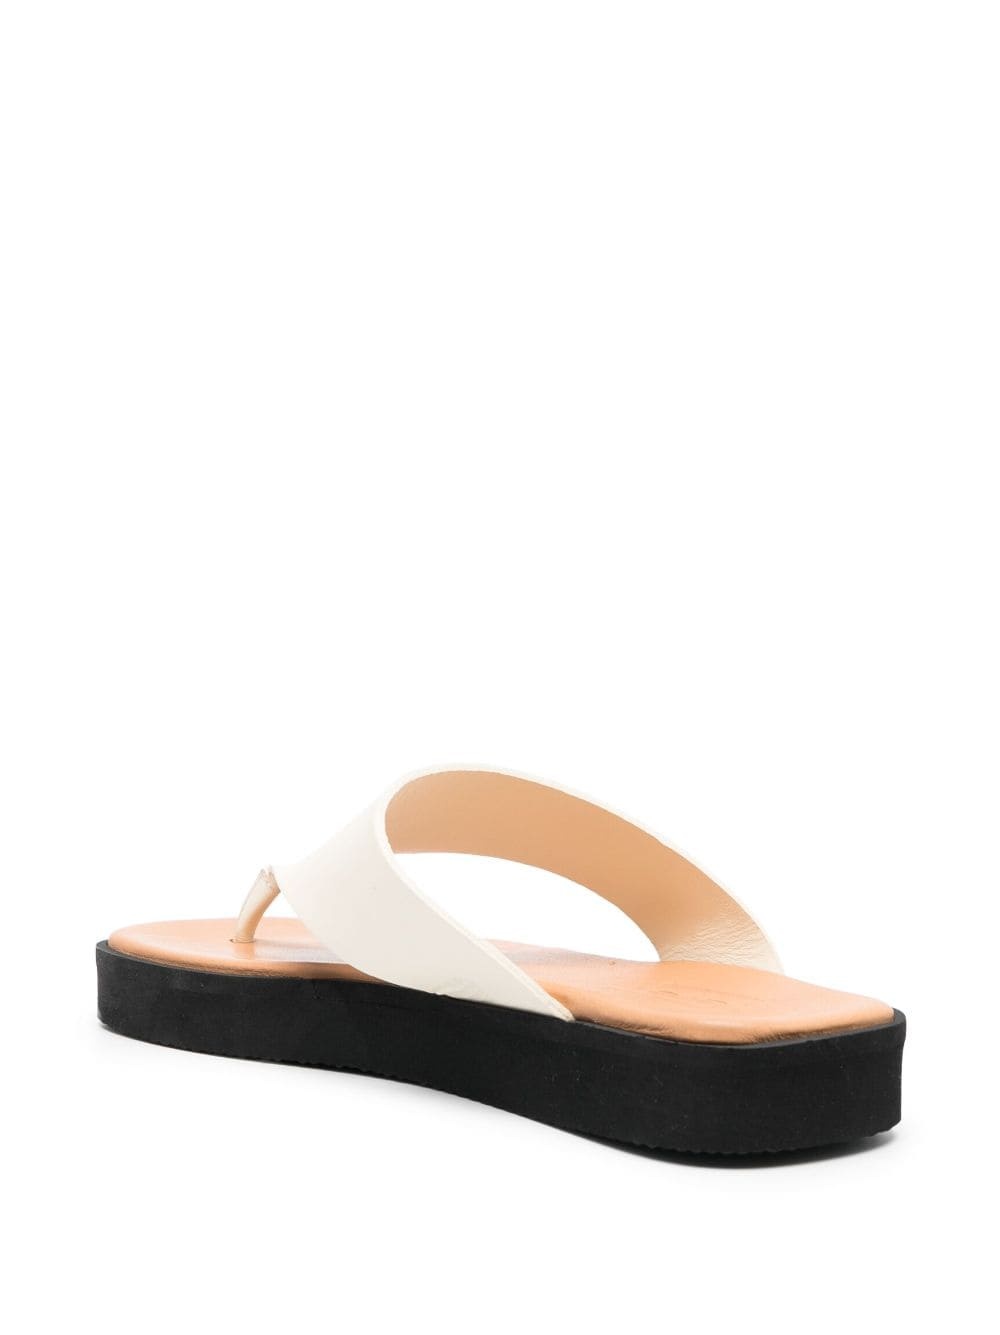 Marisol leather sandals - 3